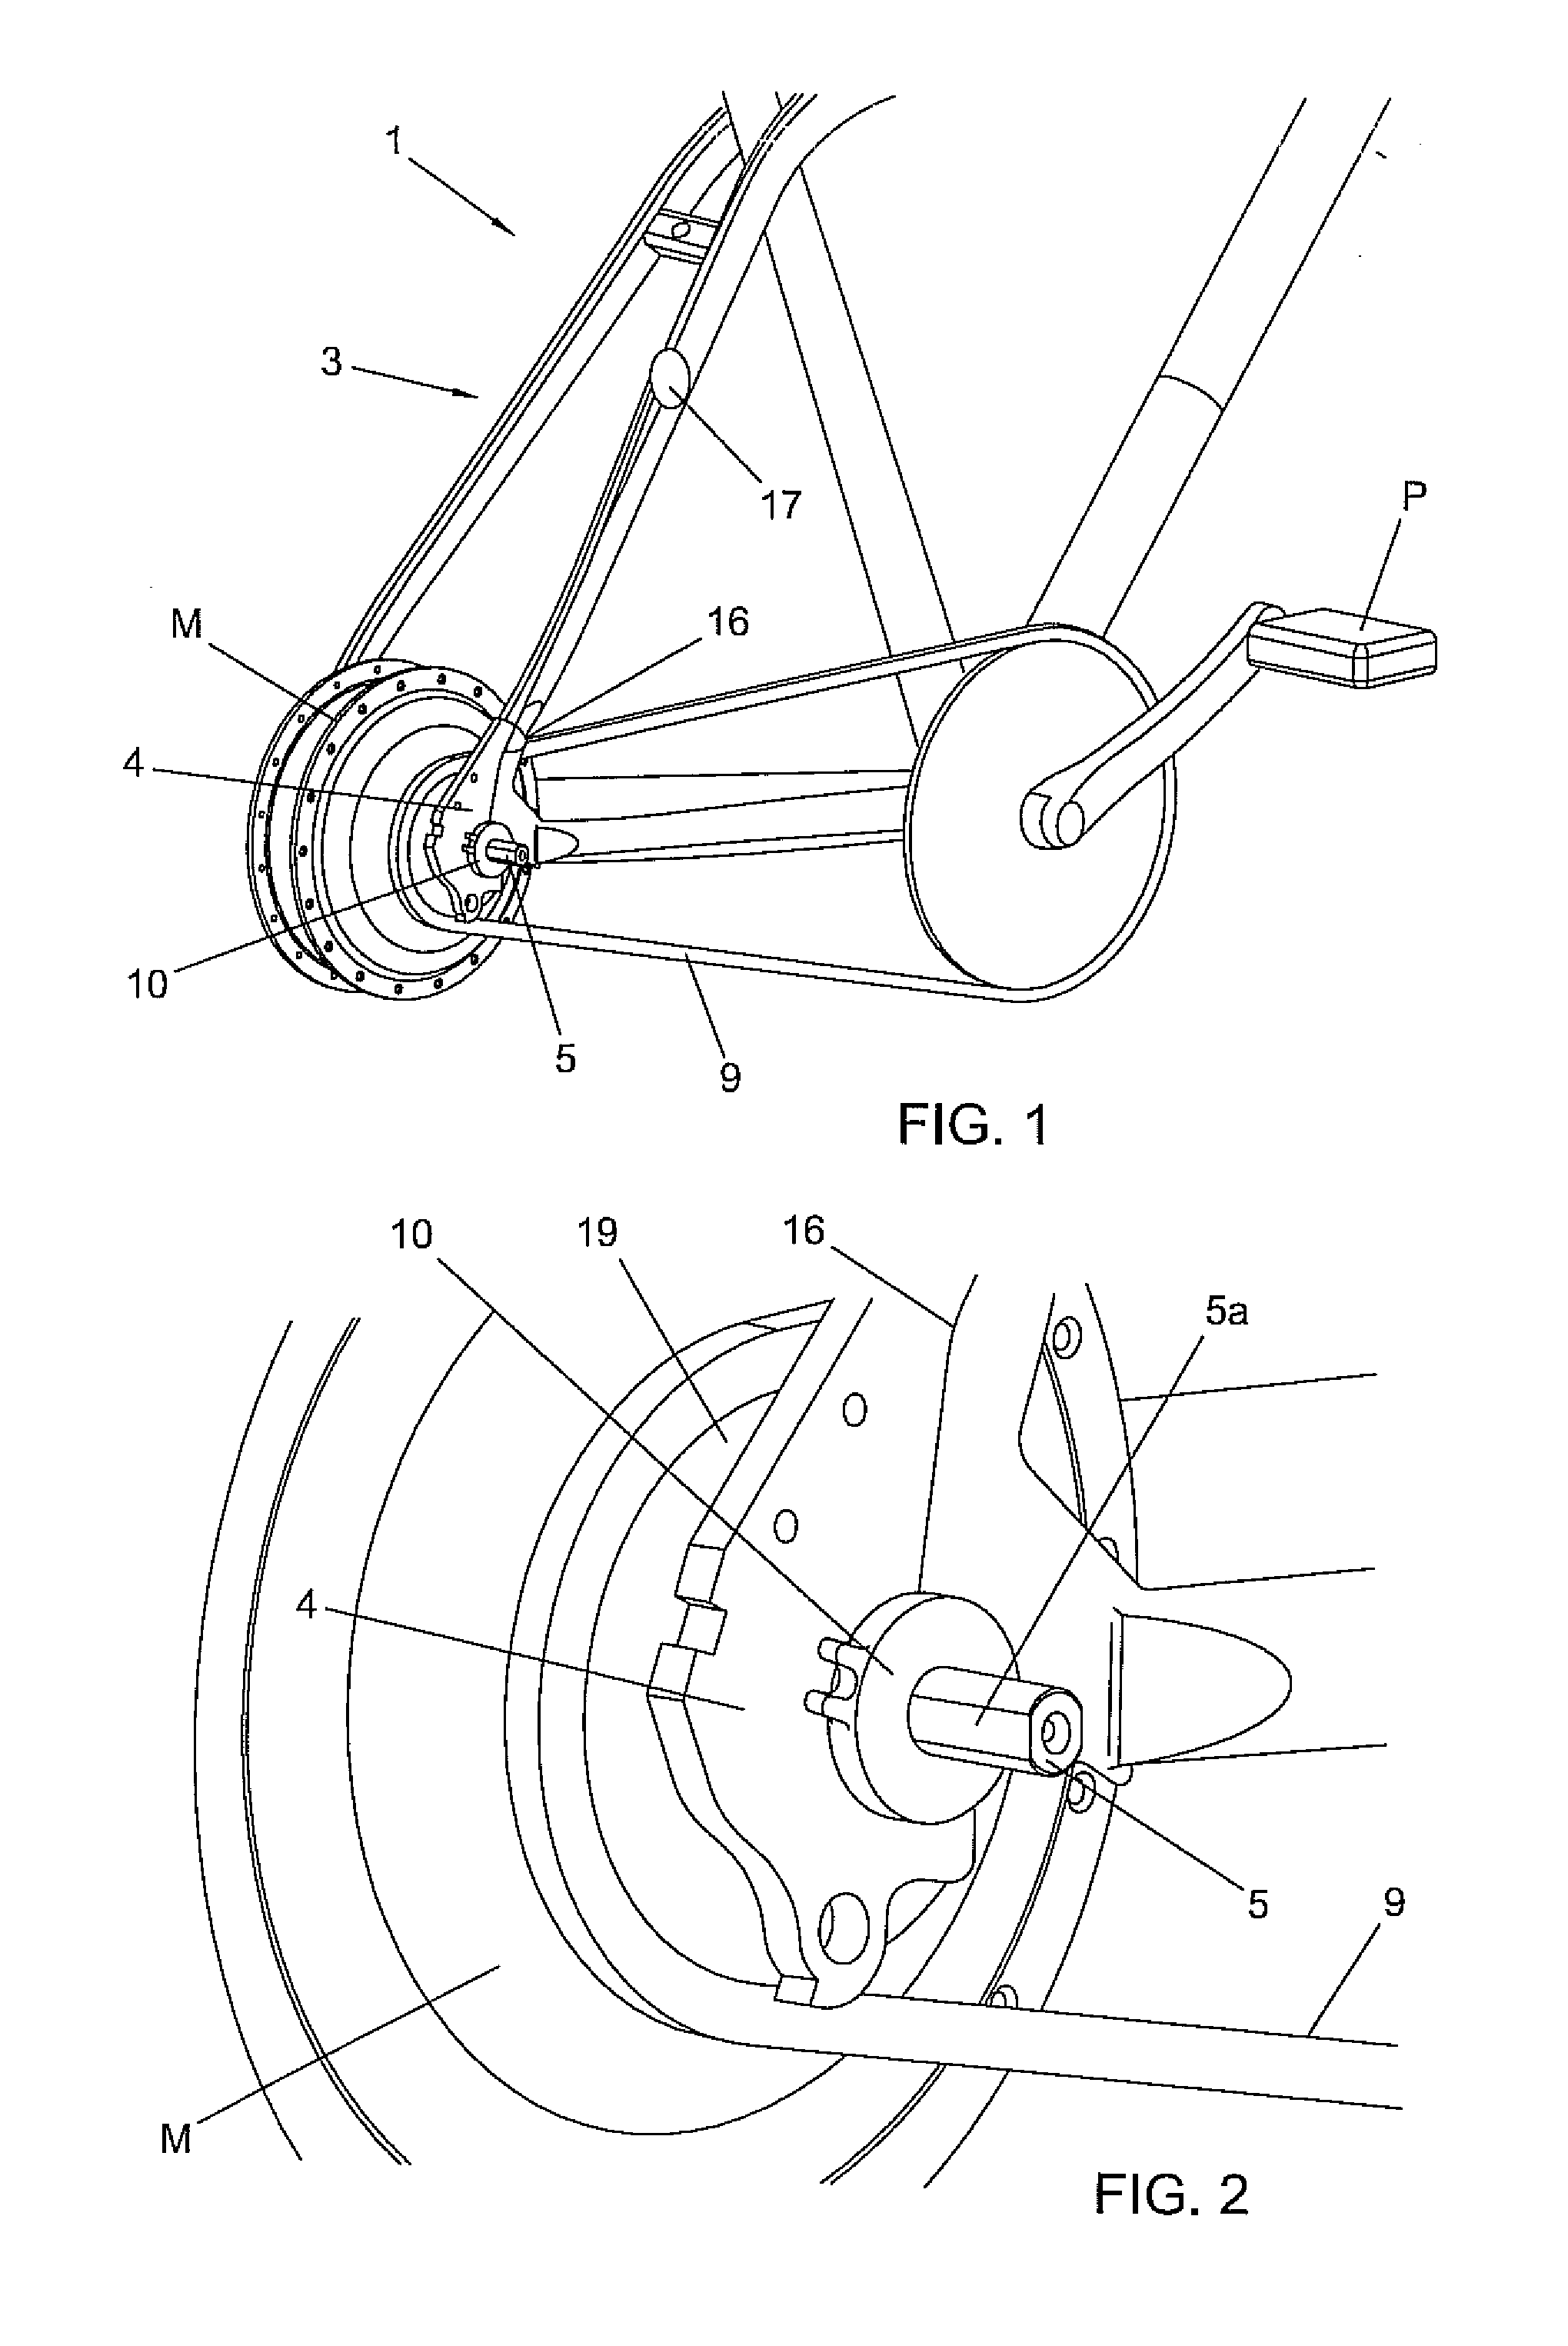 Bicycle, sensor, and method